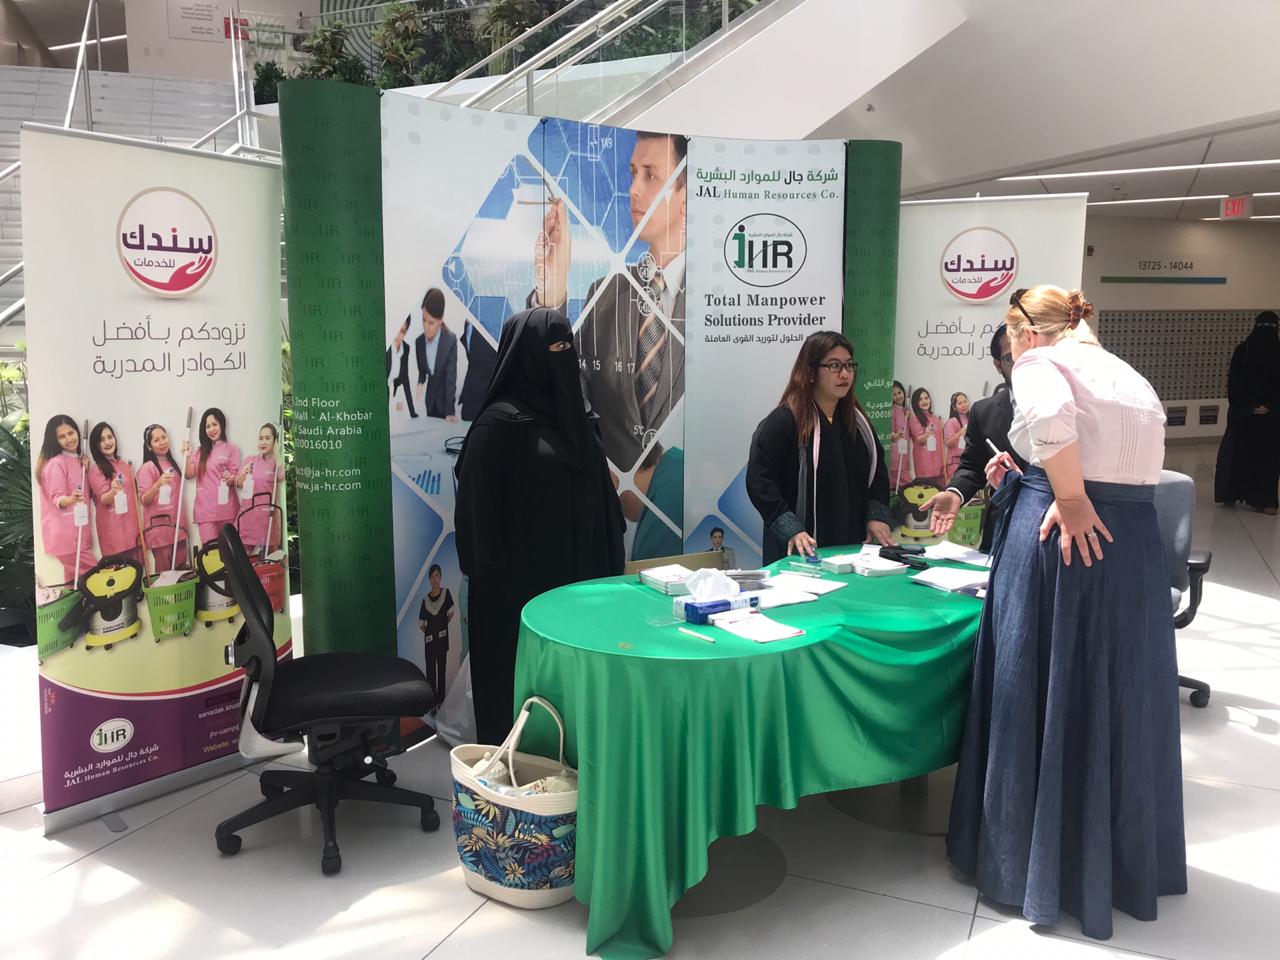 Saudi Aramco Dhahran for Domestic Services in 2019